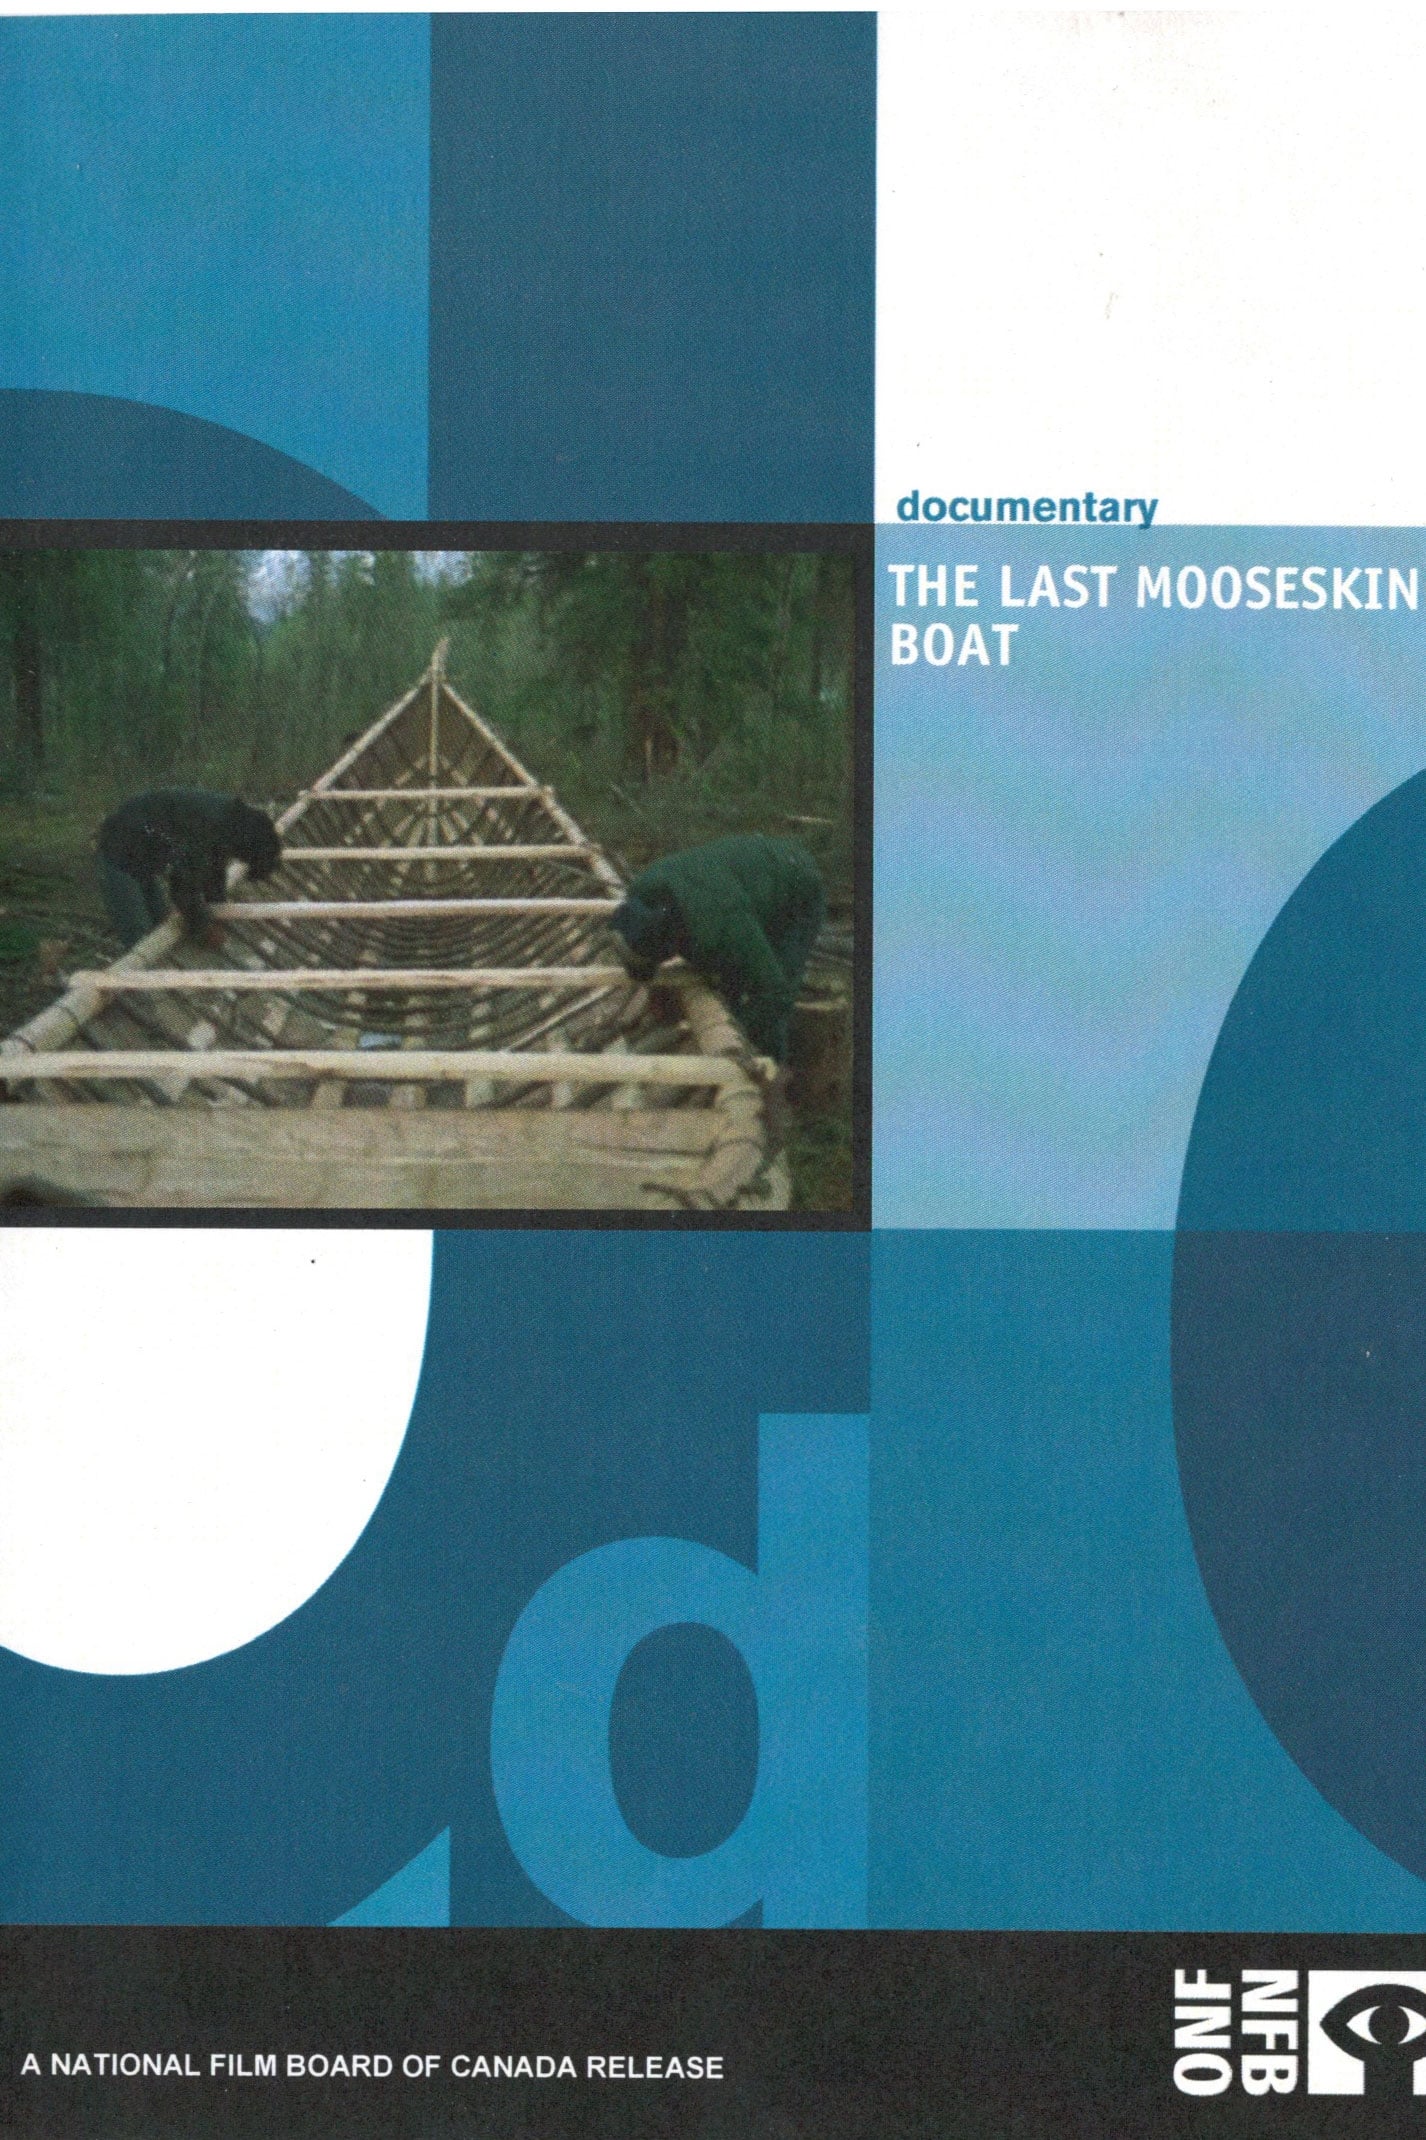 The Last Mooseskin Boat